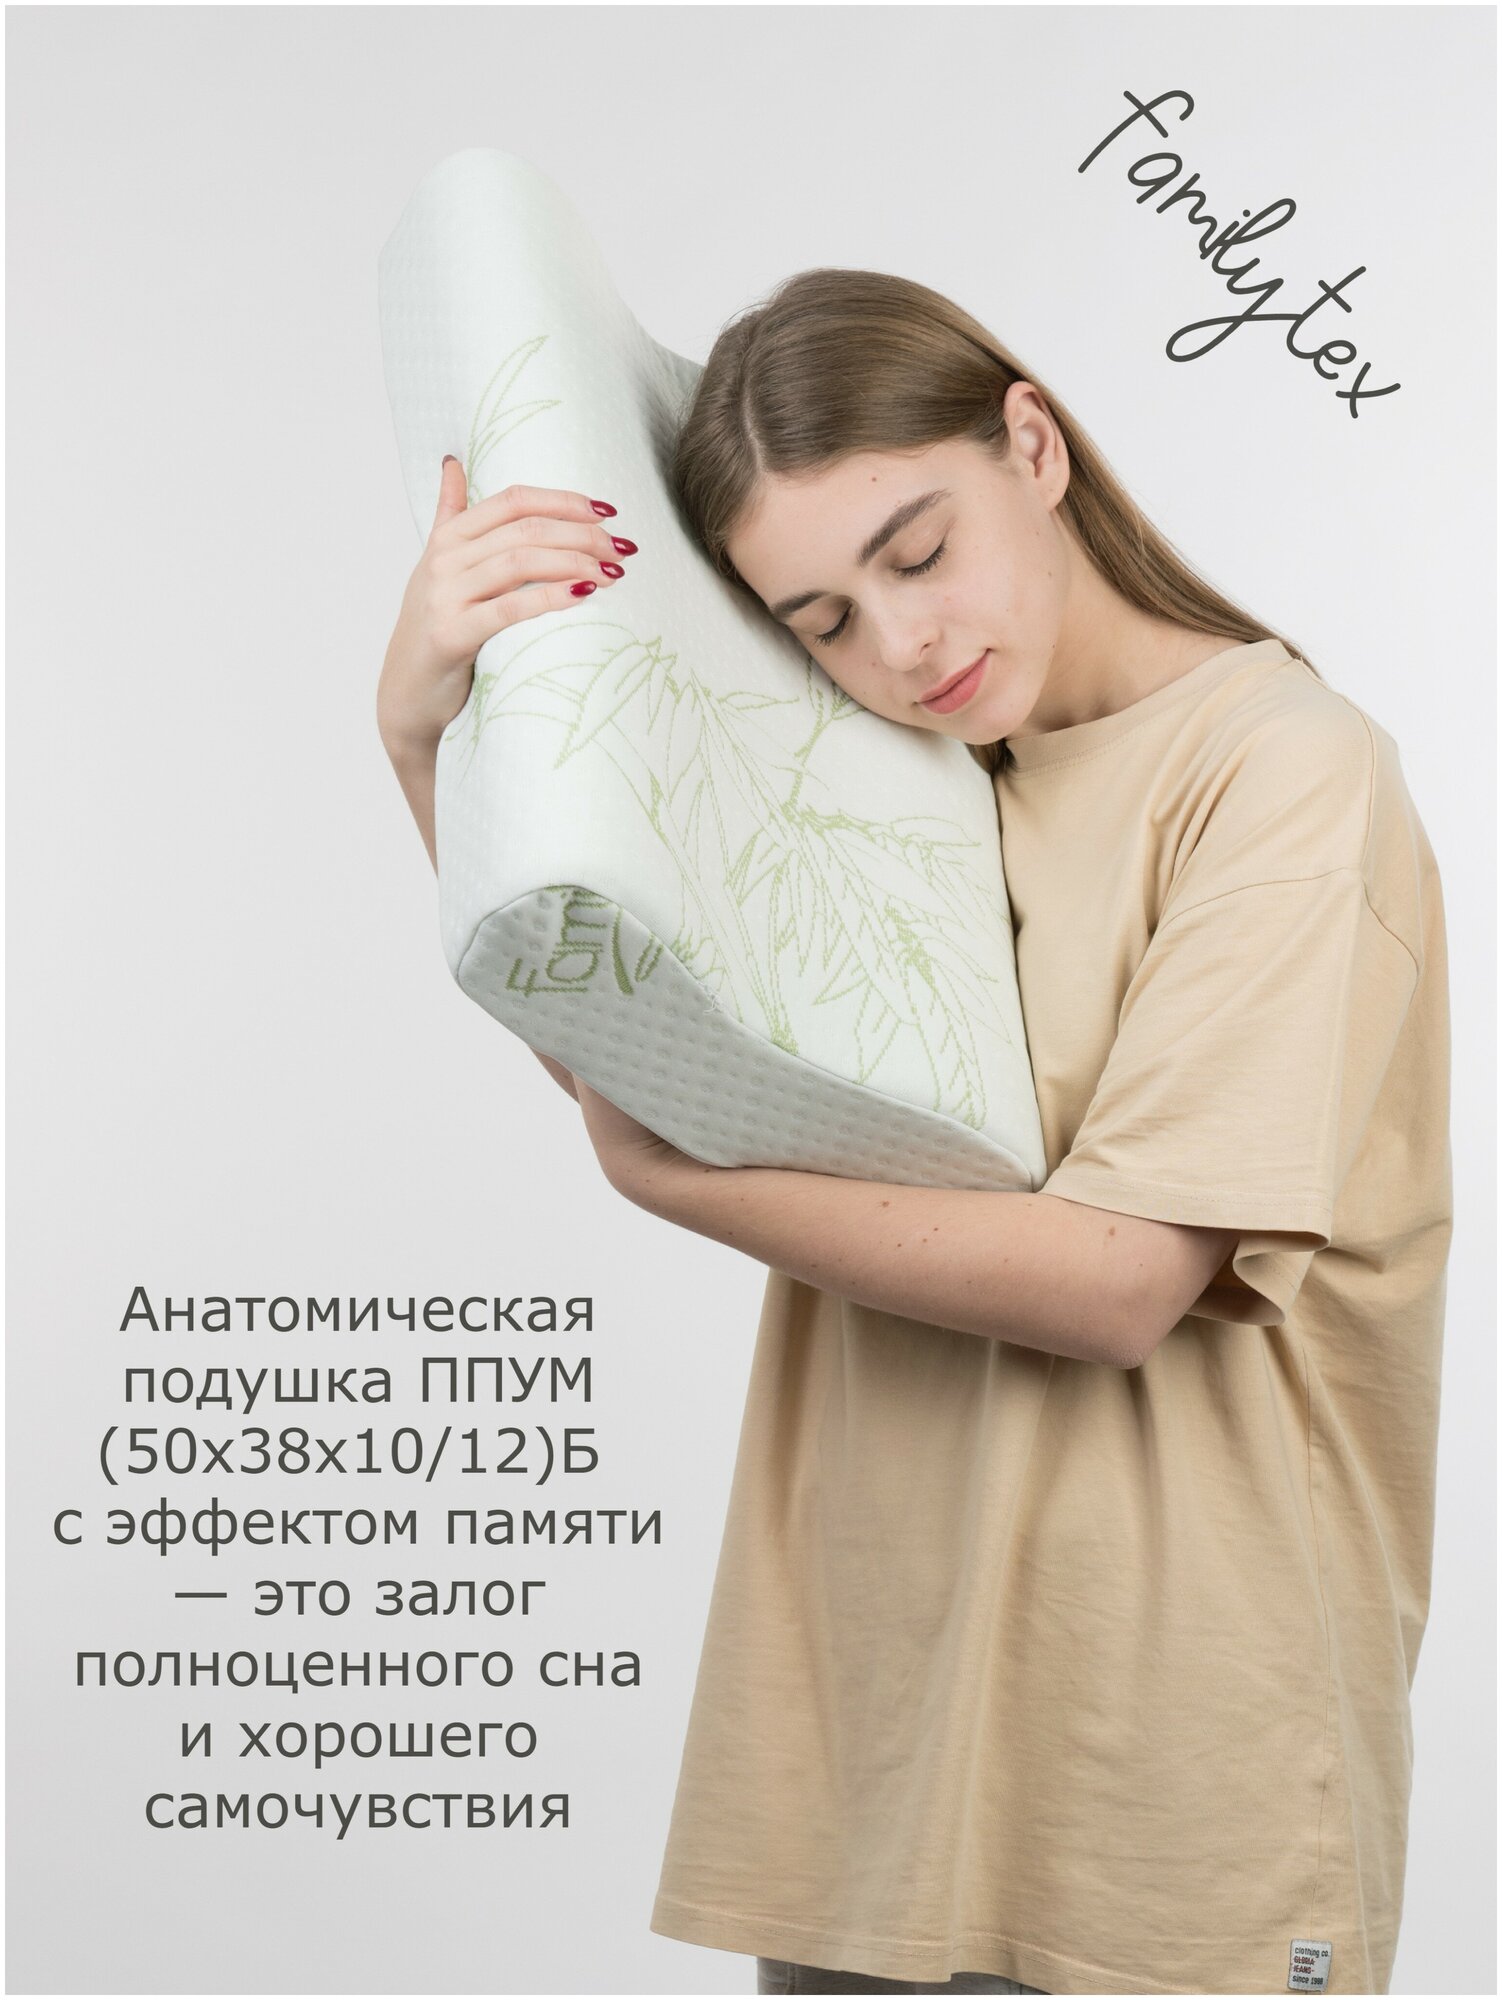 Подушка анатомическая для сна, Familytex, подушка с эффектом памяти, артикул ппум(50Х38Х10/12)Б